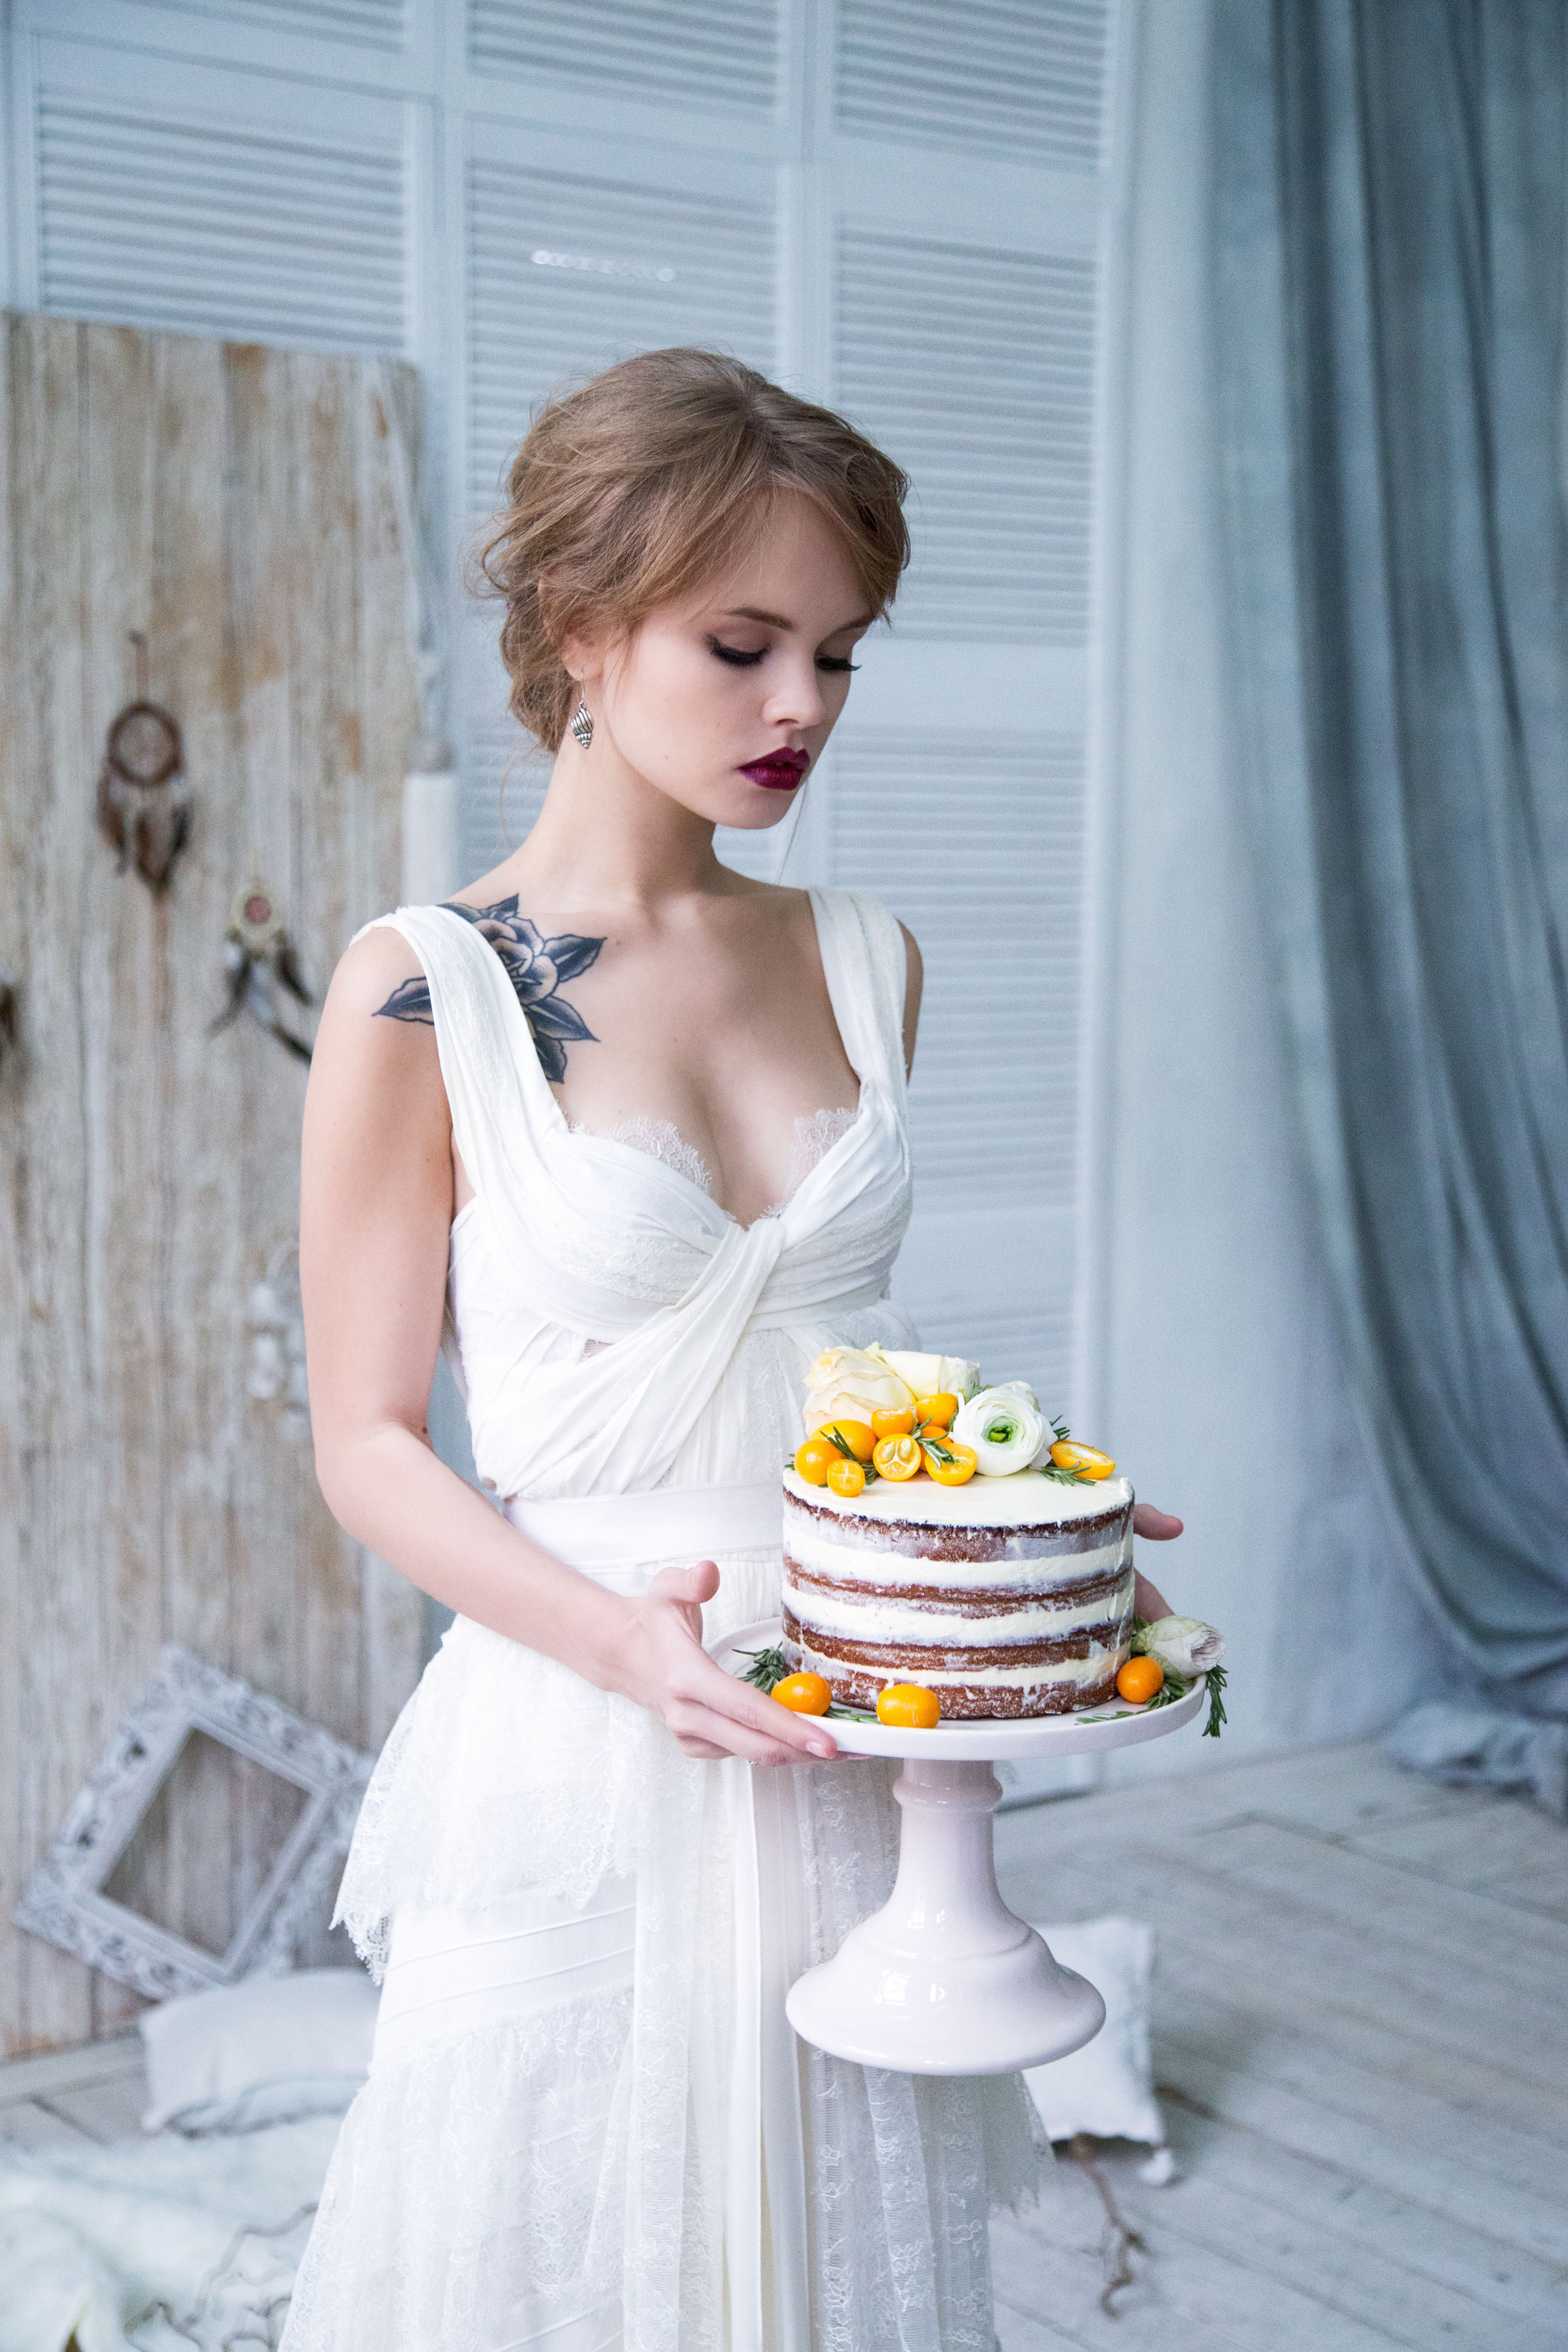 People 2000x3000 Anastasia Scheglova white dress model lips cake women bridal gown portrait display